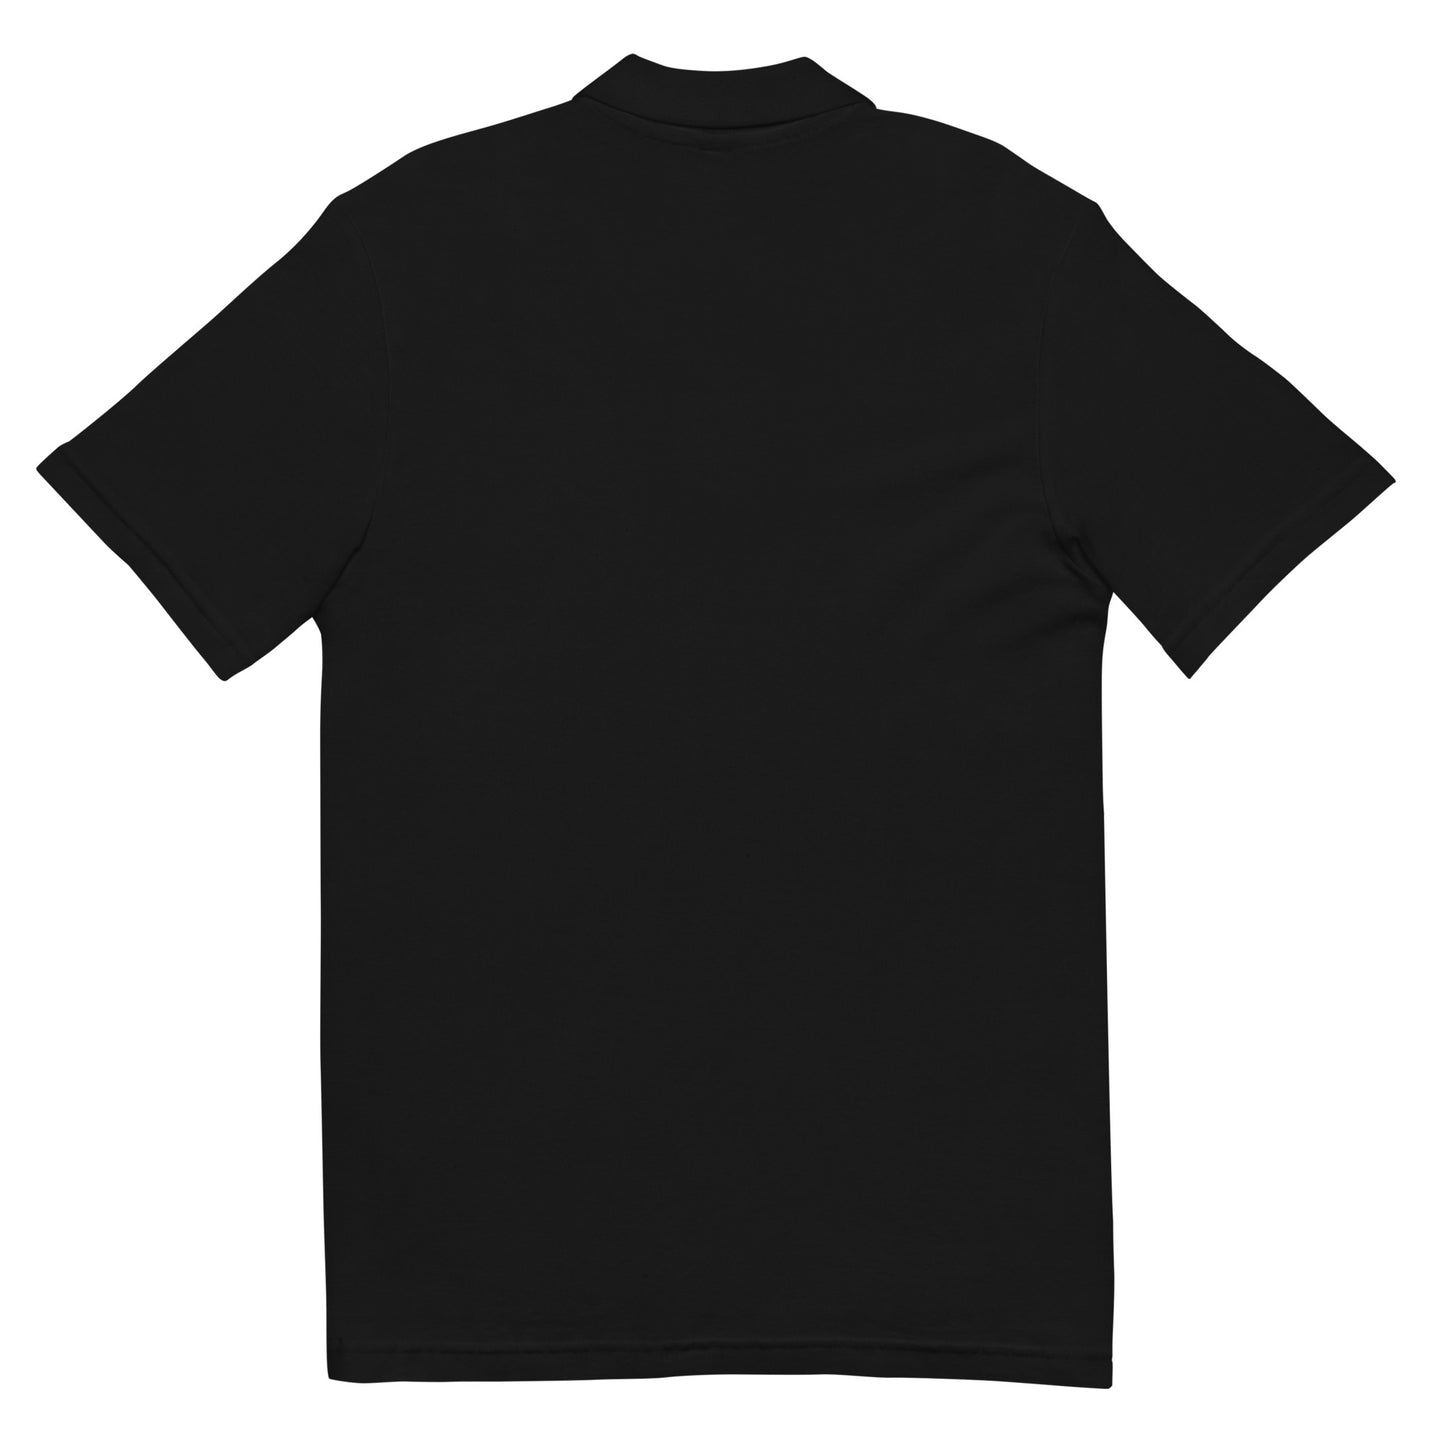 Culture Media polo shirt (Black)